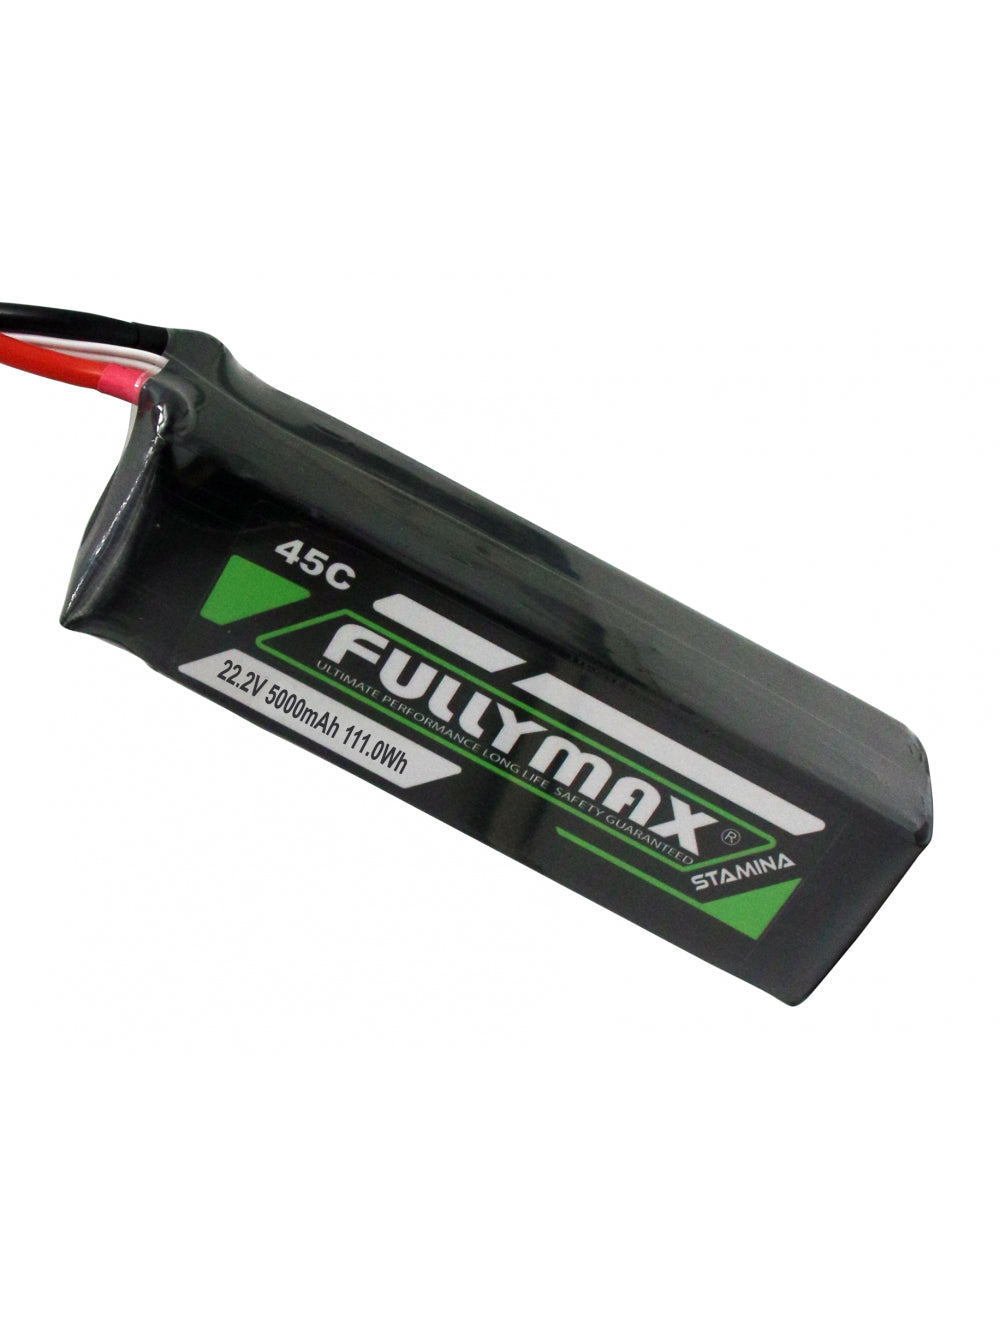 Overlander Fullymax 5000mAh 22.2V 6S 45C LiPo Battery - XT90 Connector 3448